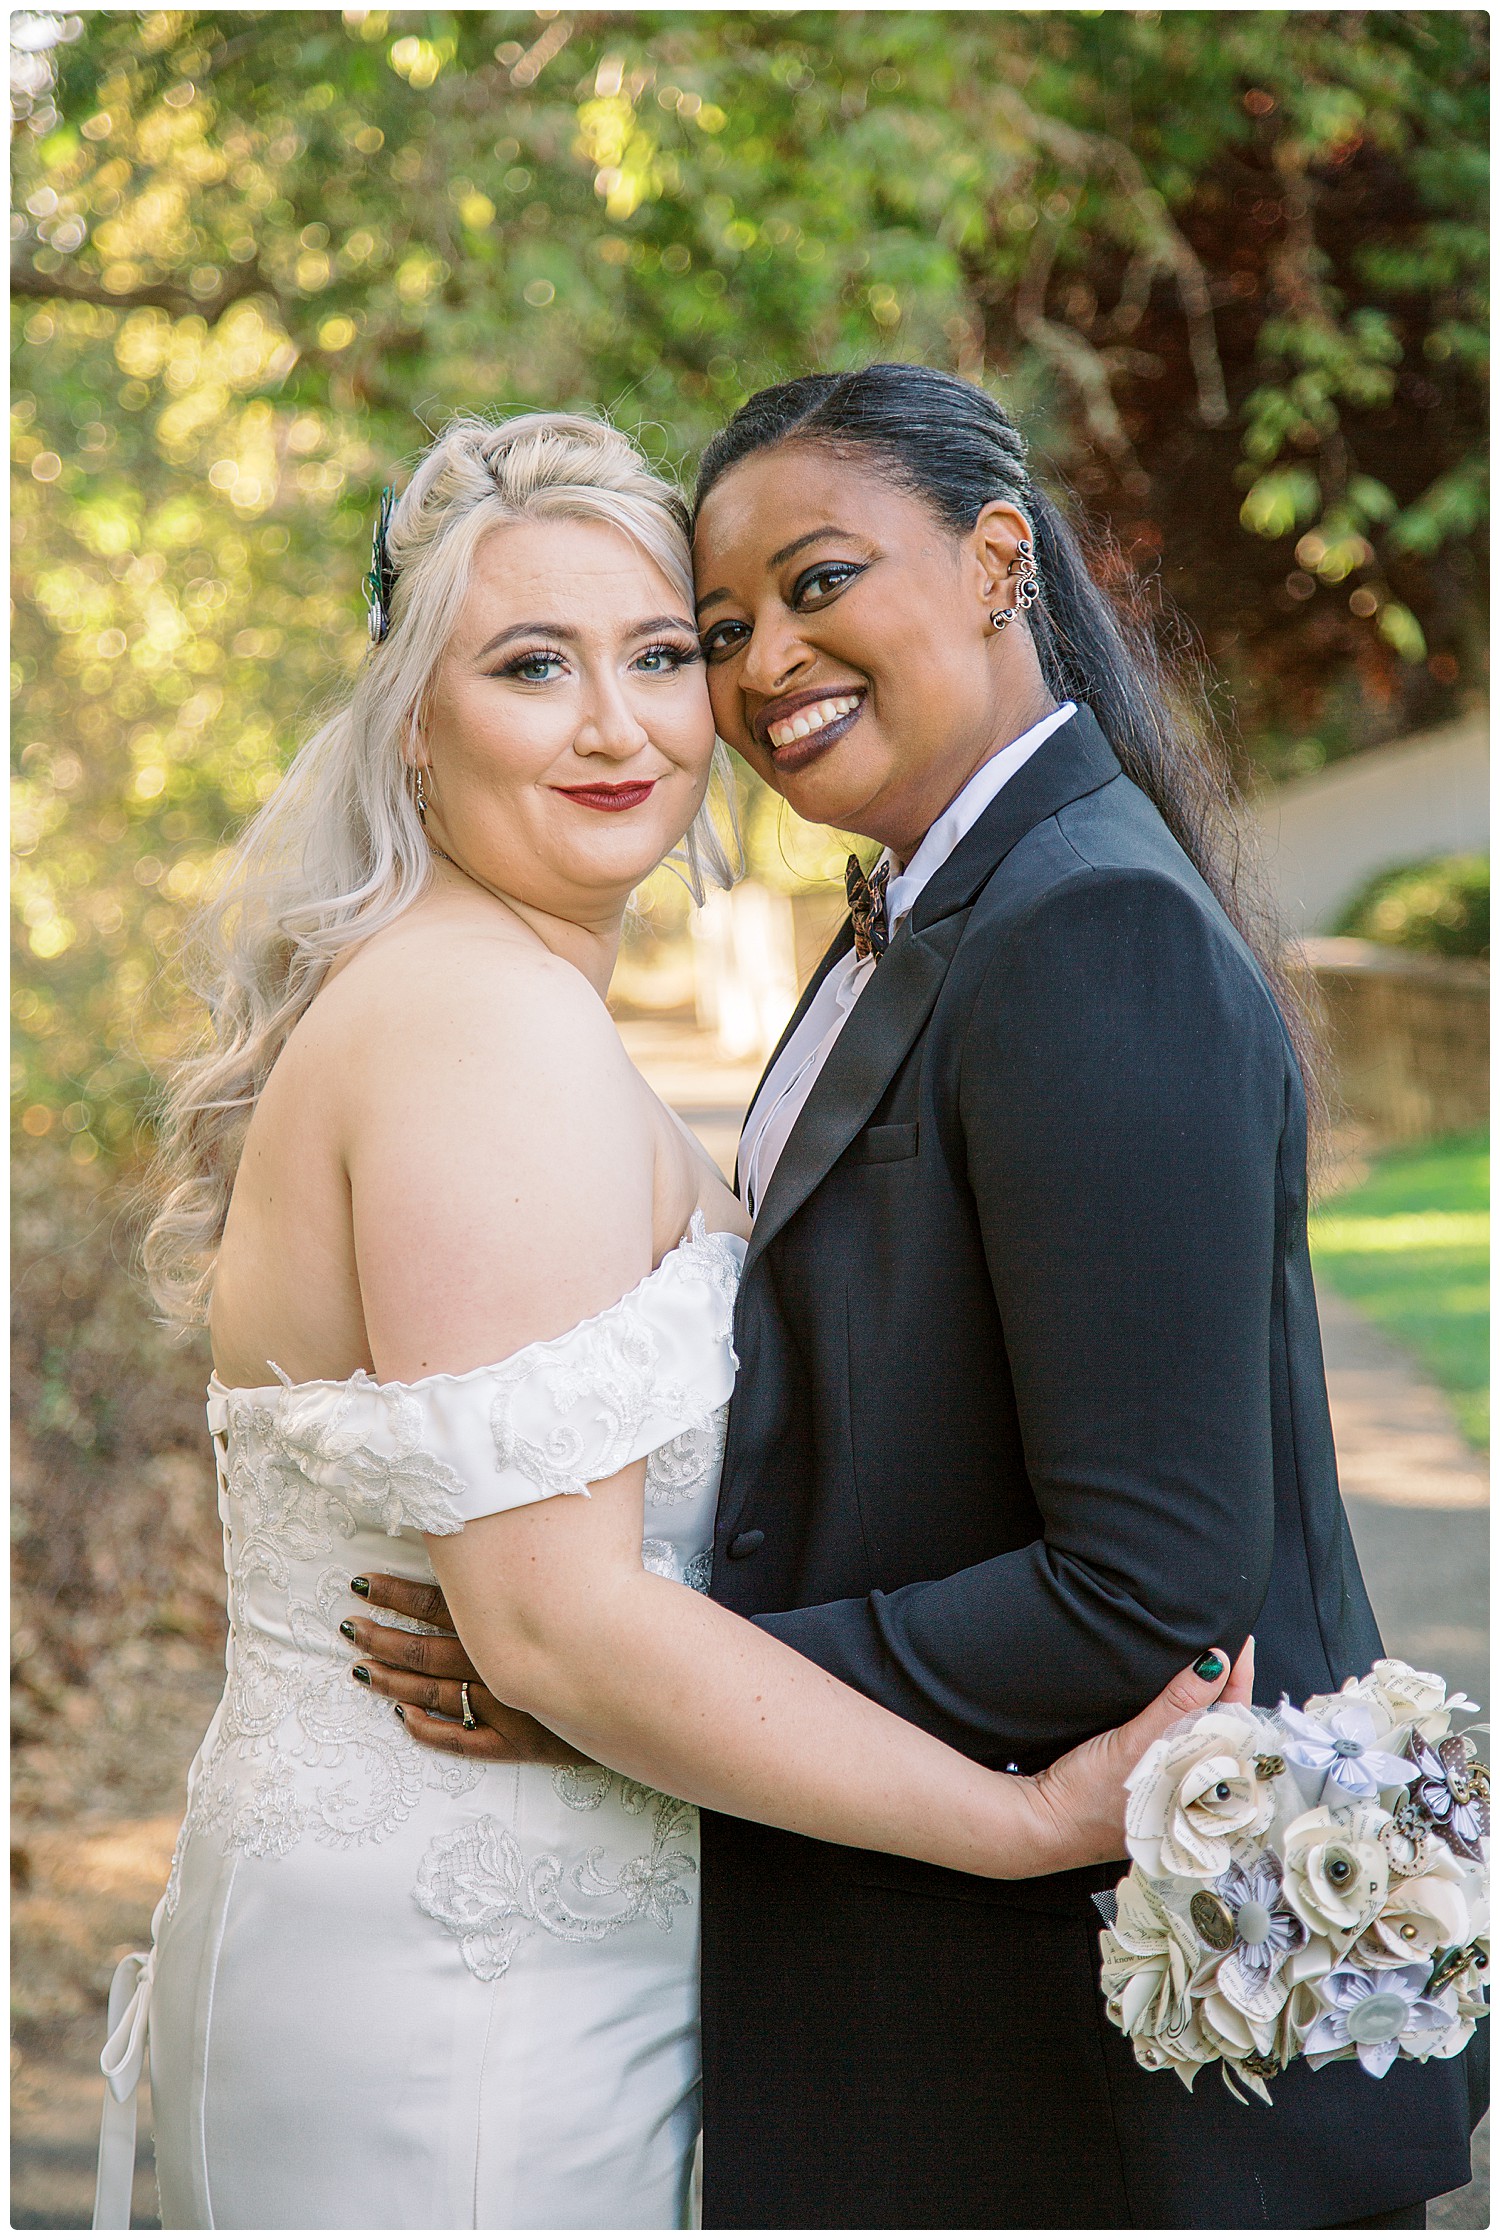 California wedding photographer - brides cheek to cheek smiling at the camera- Avila Beach California wedding